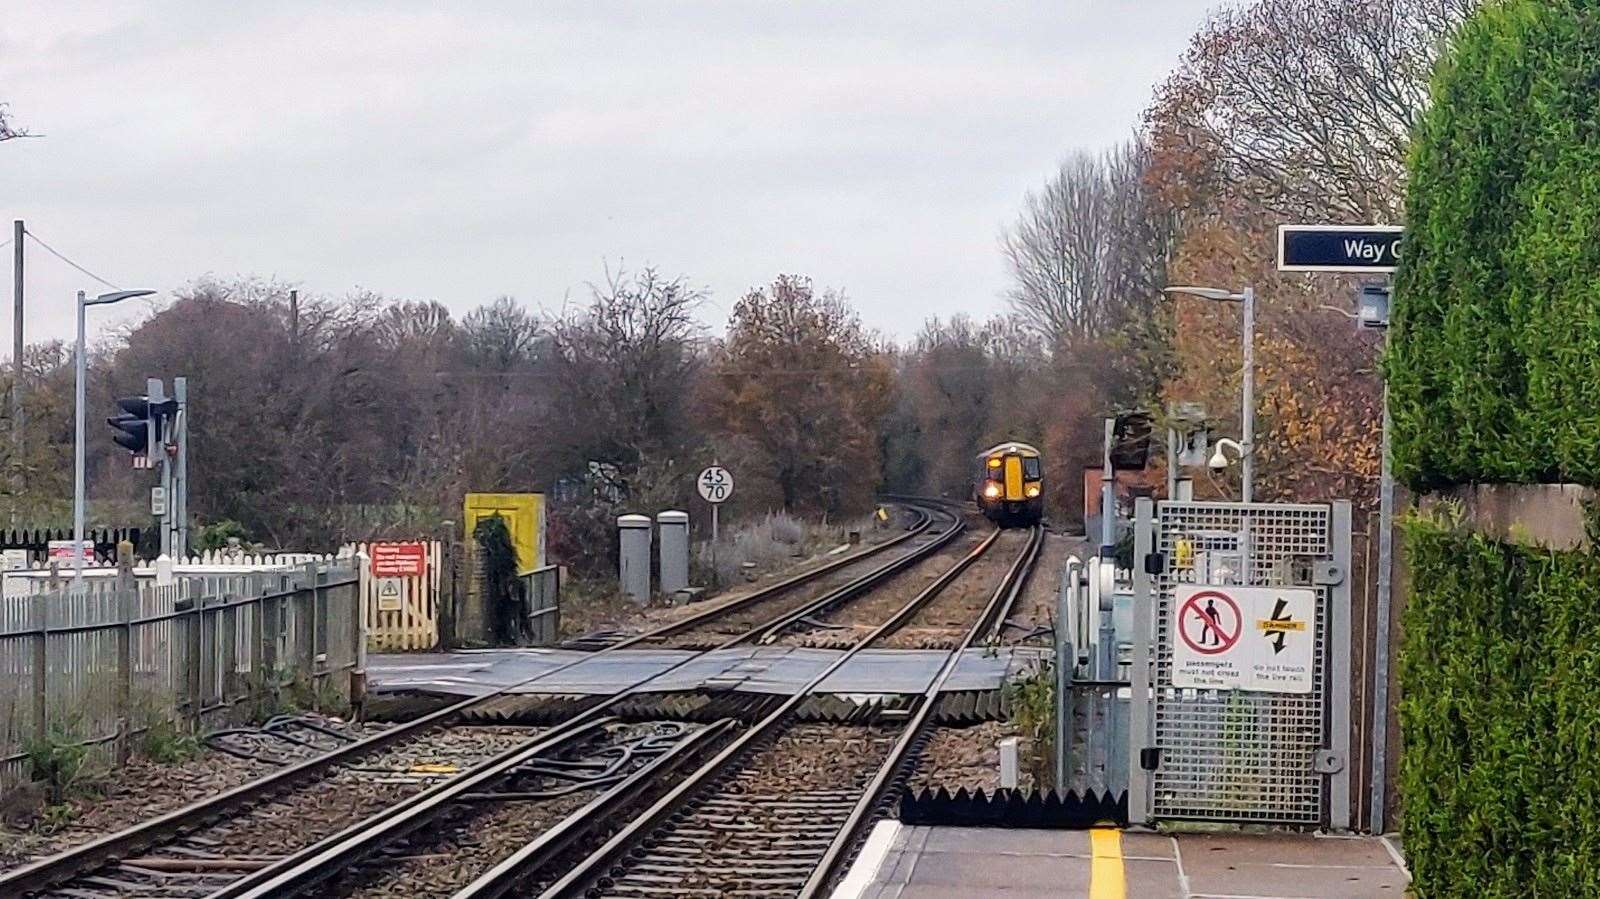 Beltring railway station near Paddock Wood